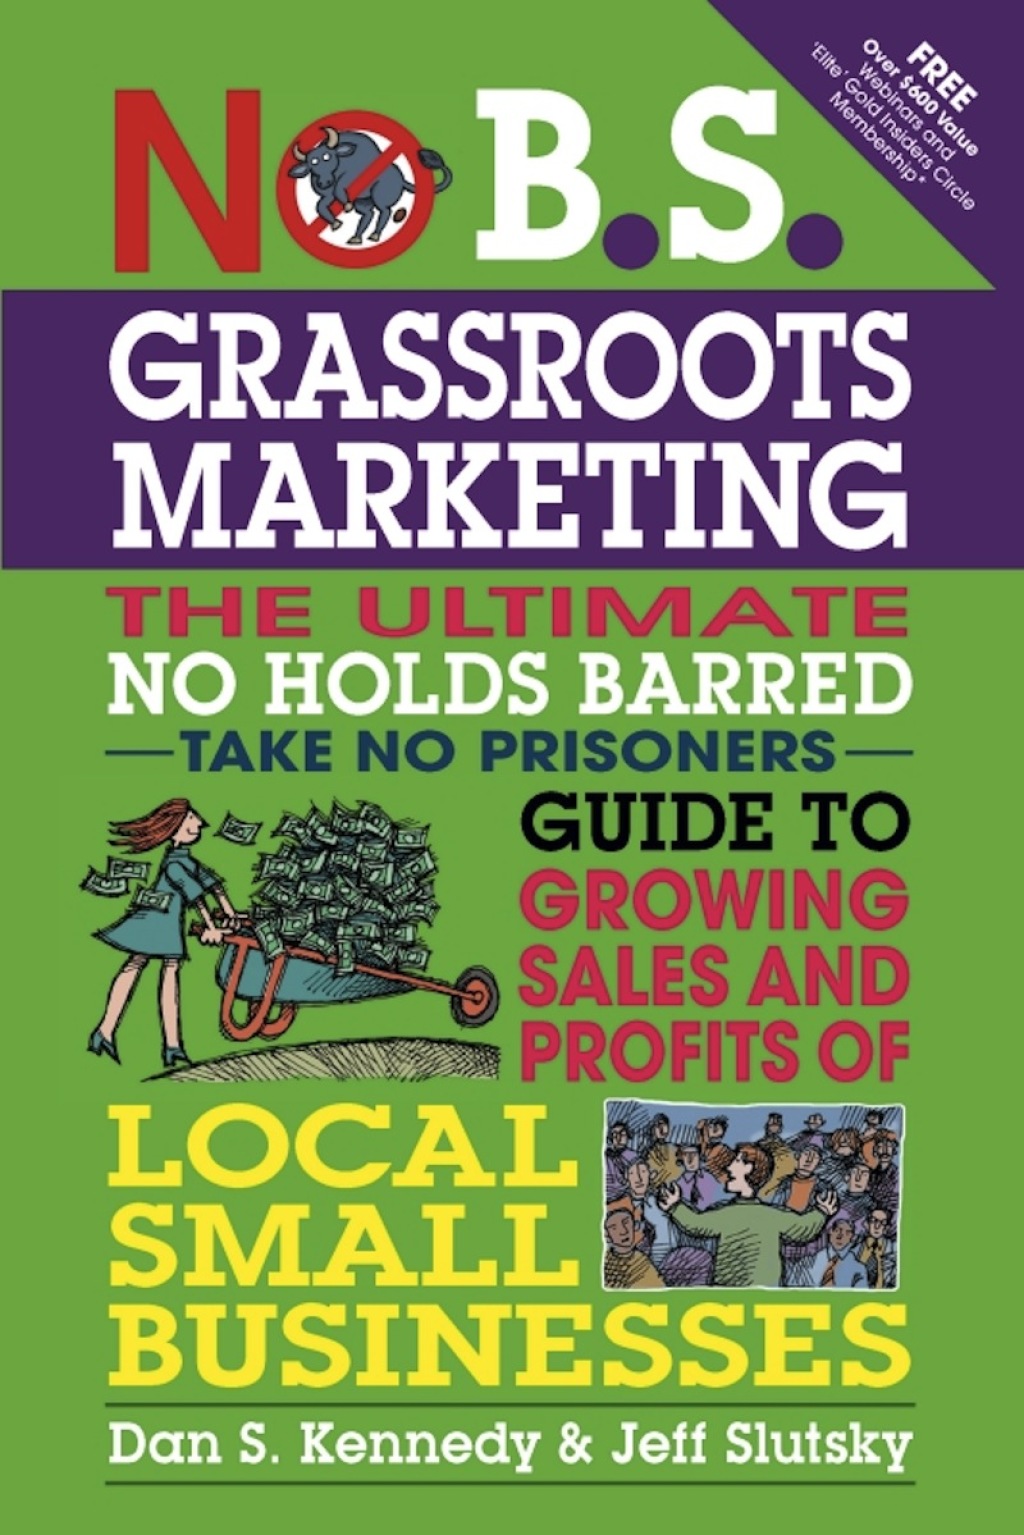 No B.S. Grassroots Marketing (eBook) - Dan S. Kennedy